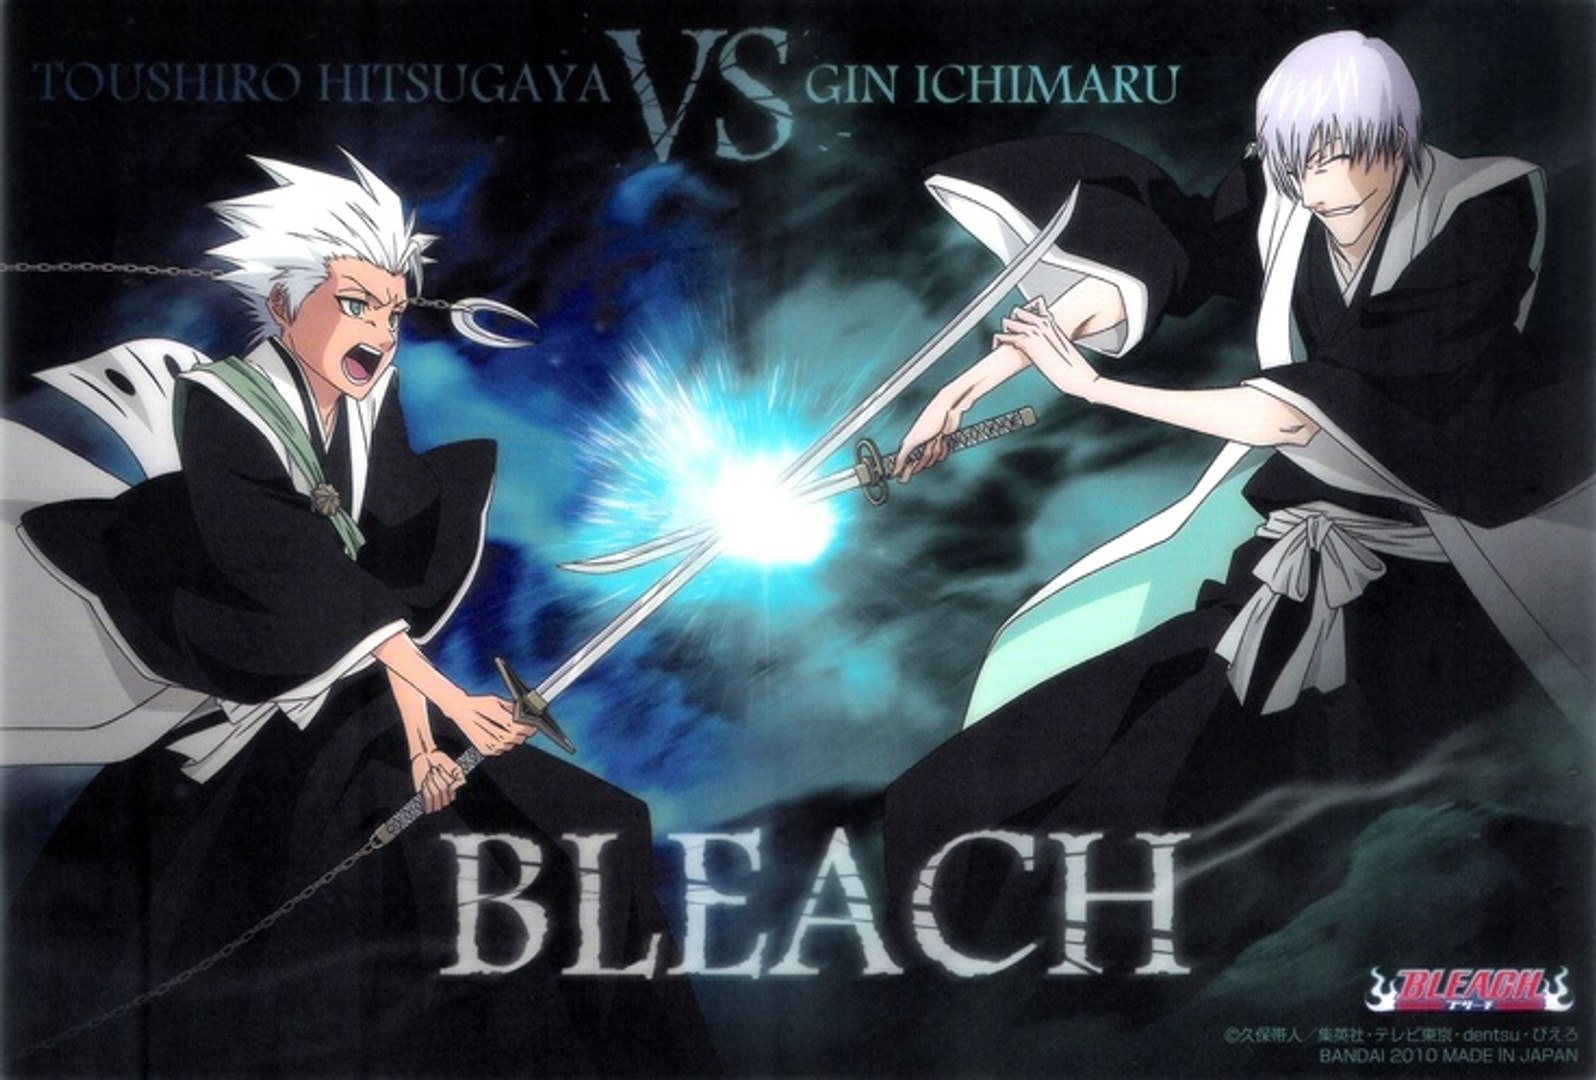 Bleach:#Gin Ichimaru VS Capitão Hitsugaya# dublagem original.